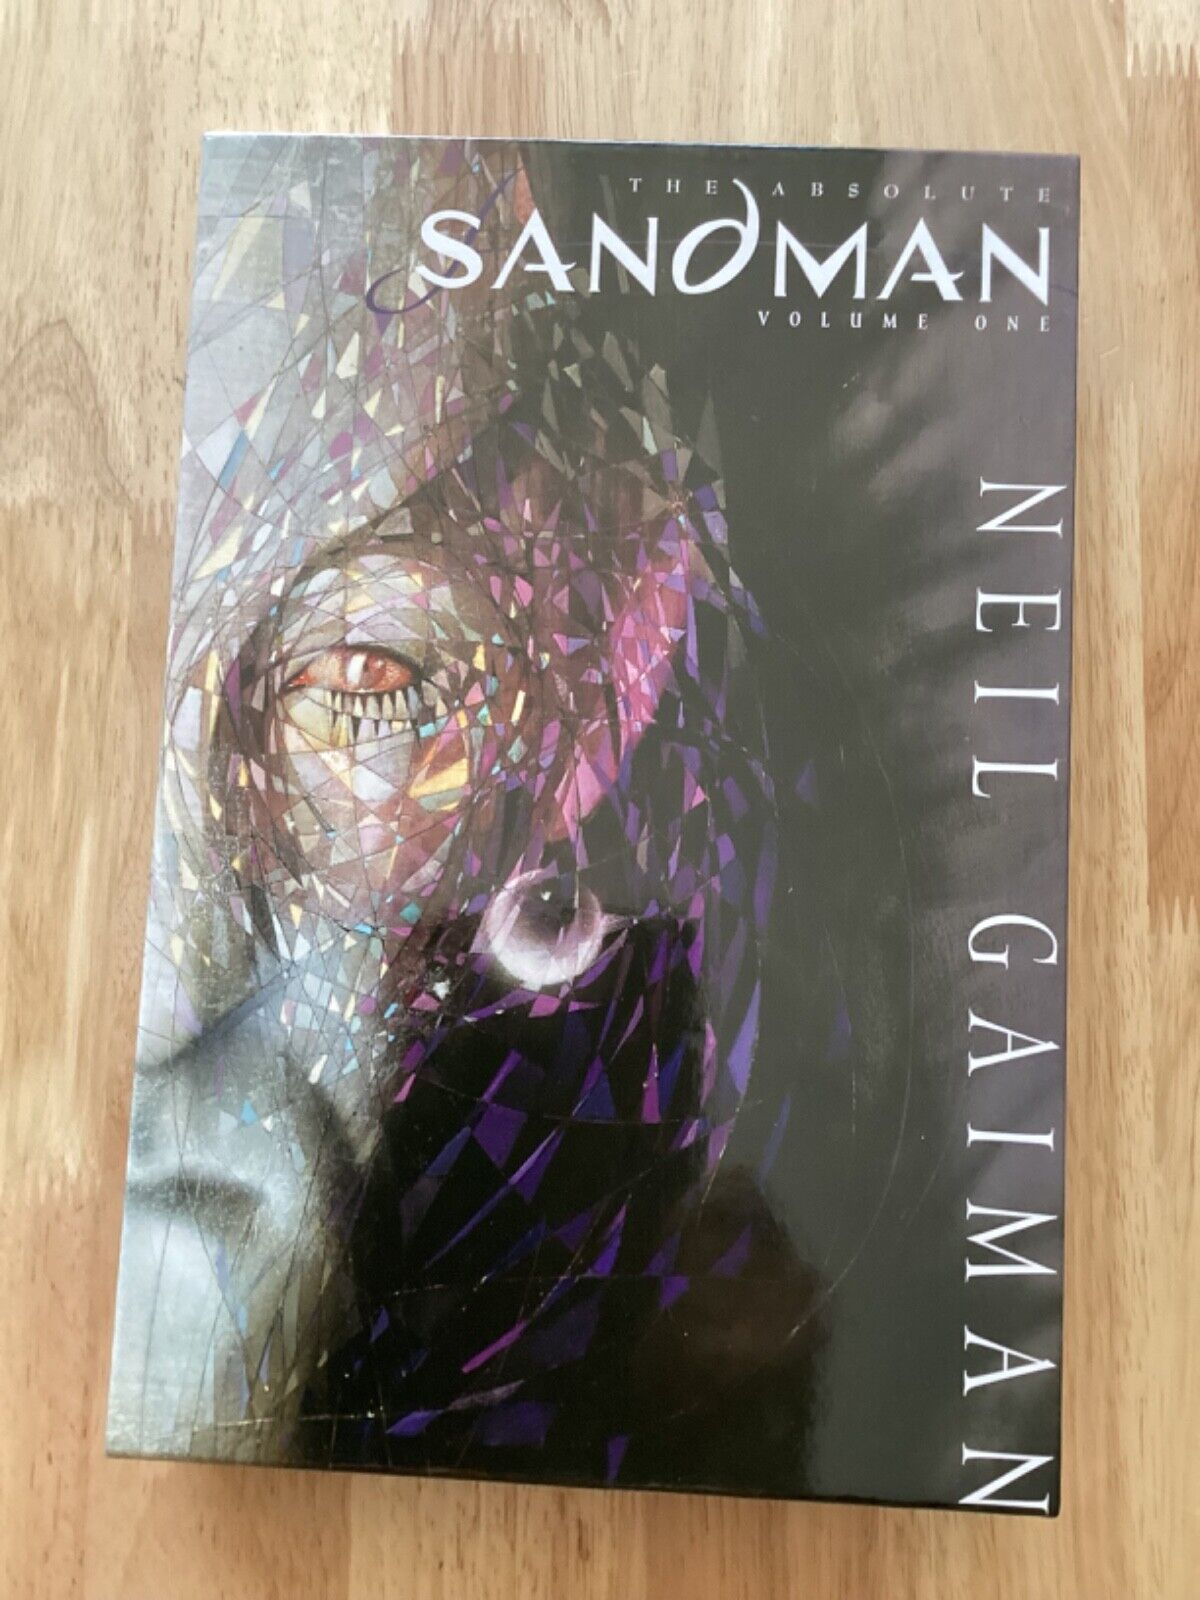 The Absolute Sandman Volume 1 hardcover Unread Condition